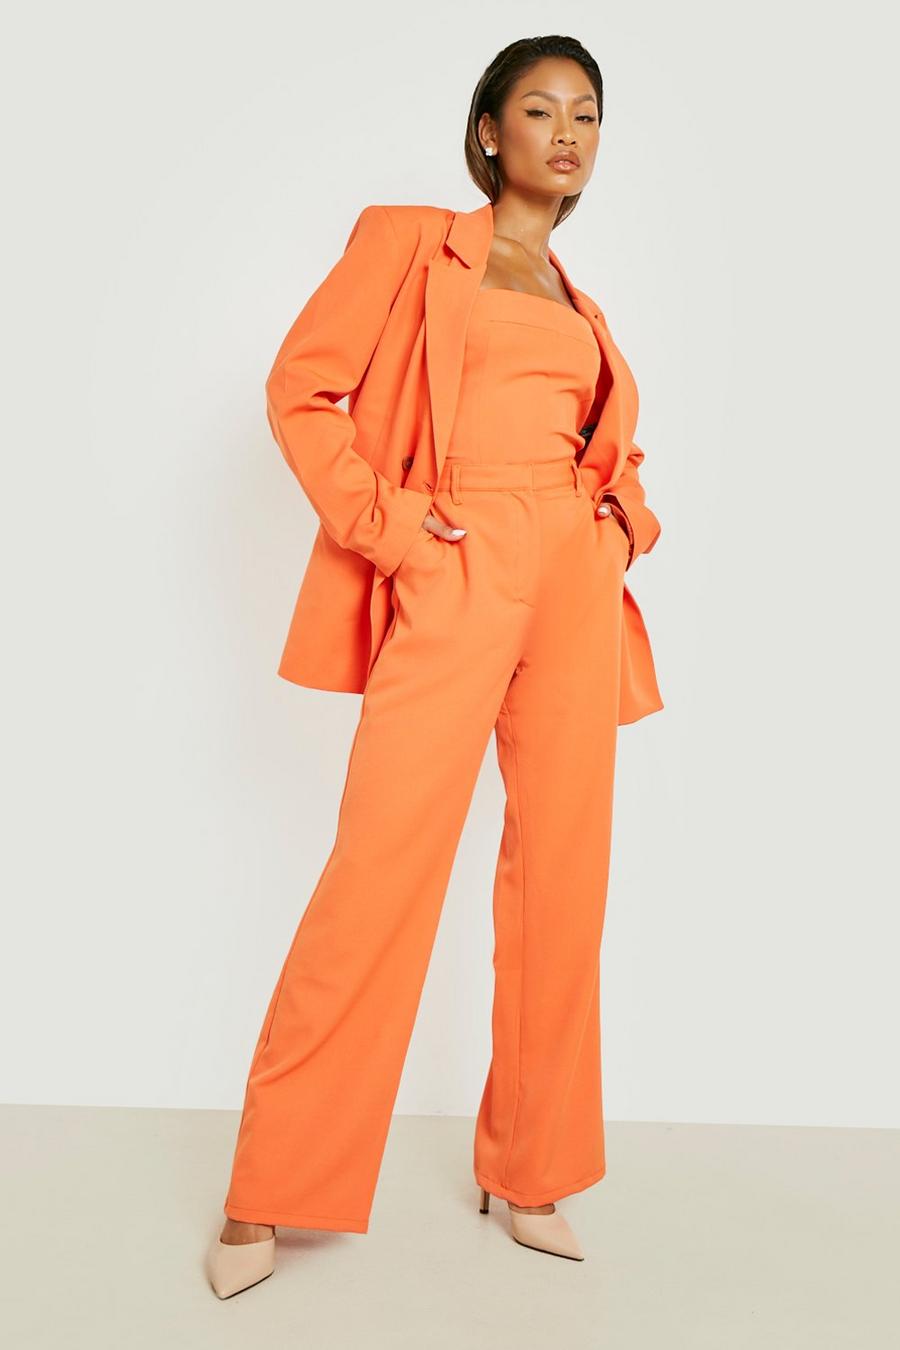 Megan Fox - Pantalon droit ajusté, Orange